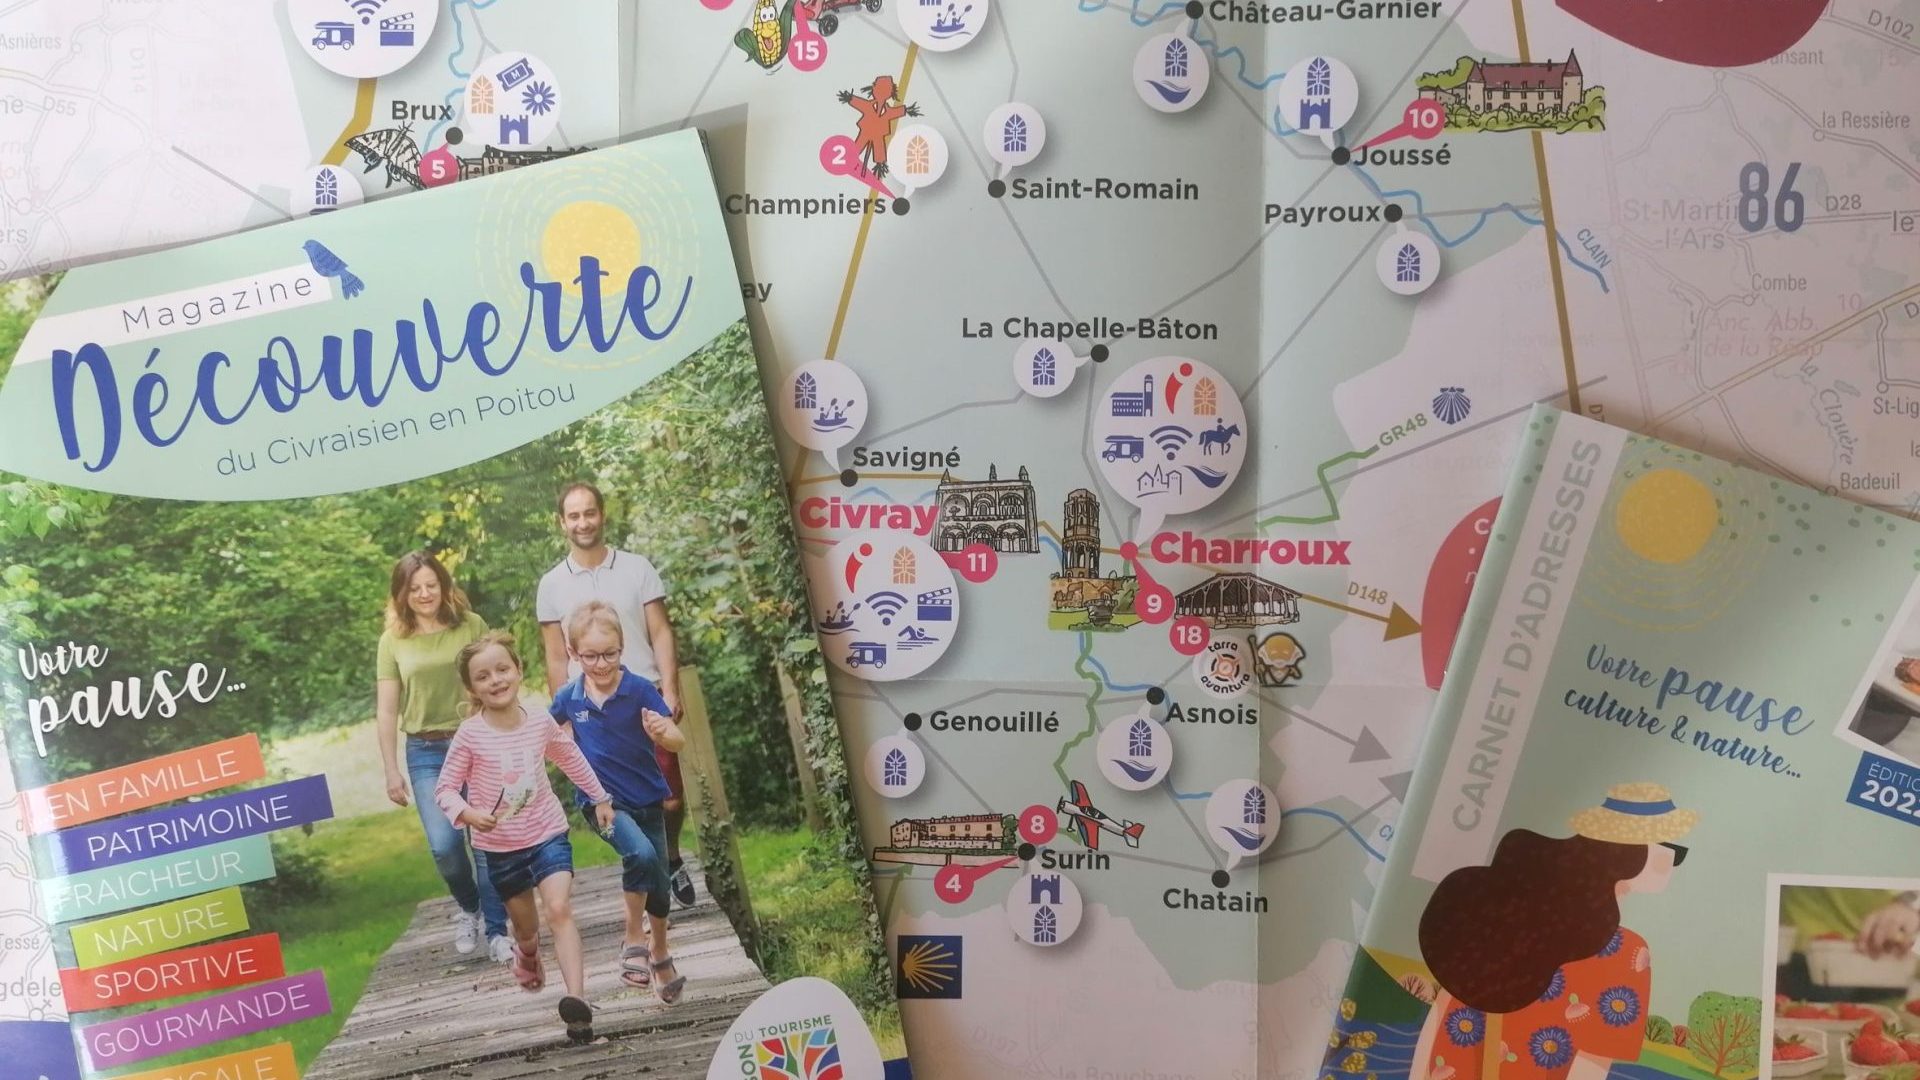 Tourist documents Civraisien in Poitou